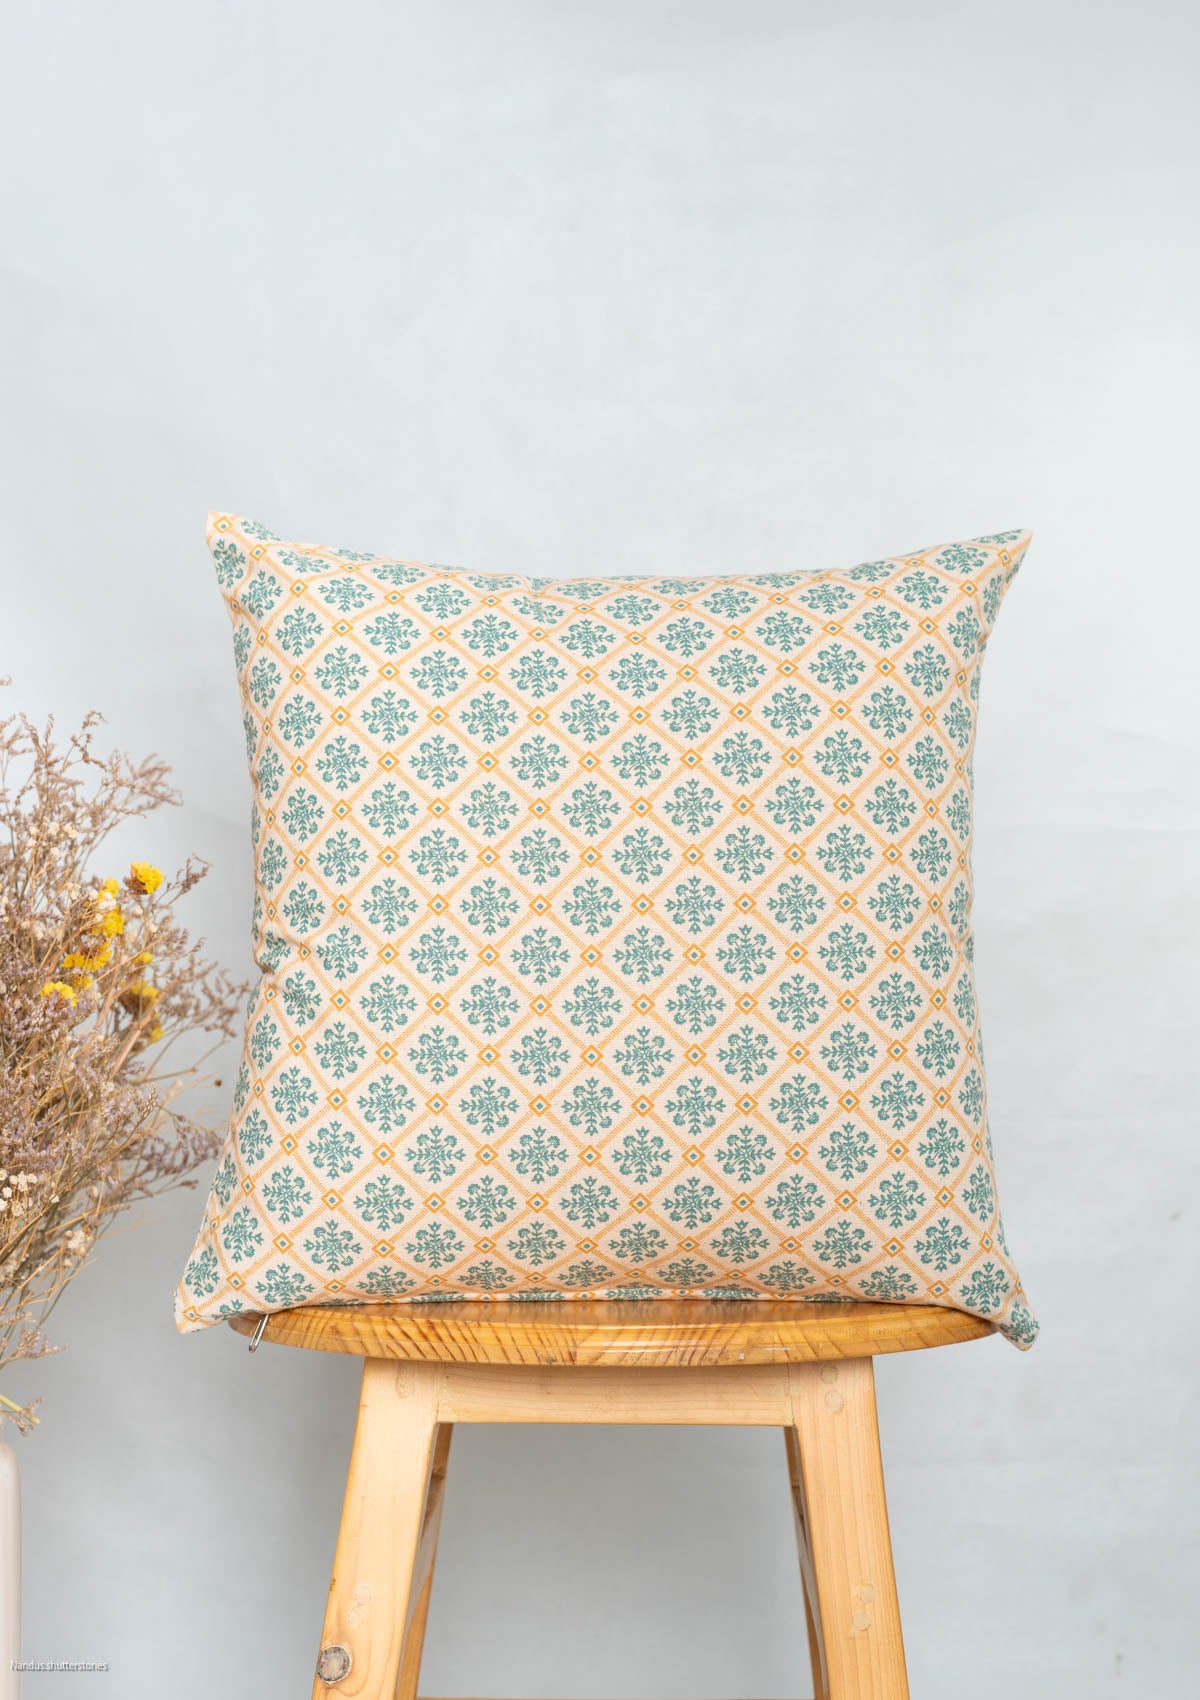 Yura 100% cotton geometric customisable floral cushion cover for sofa - Aqua blue